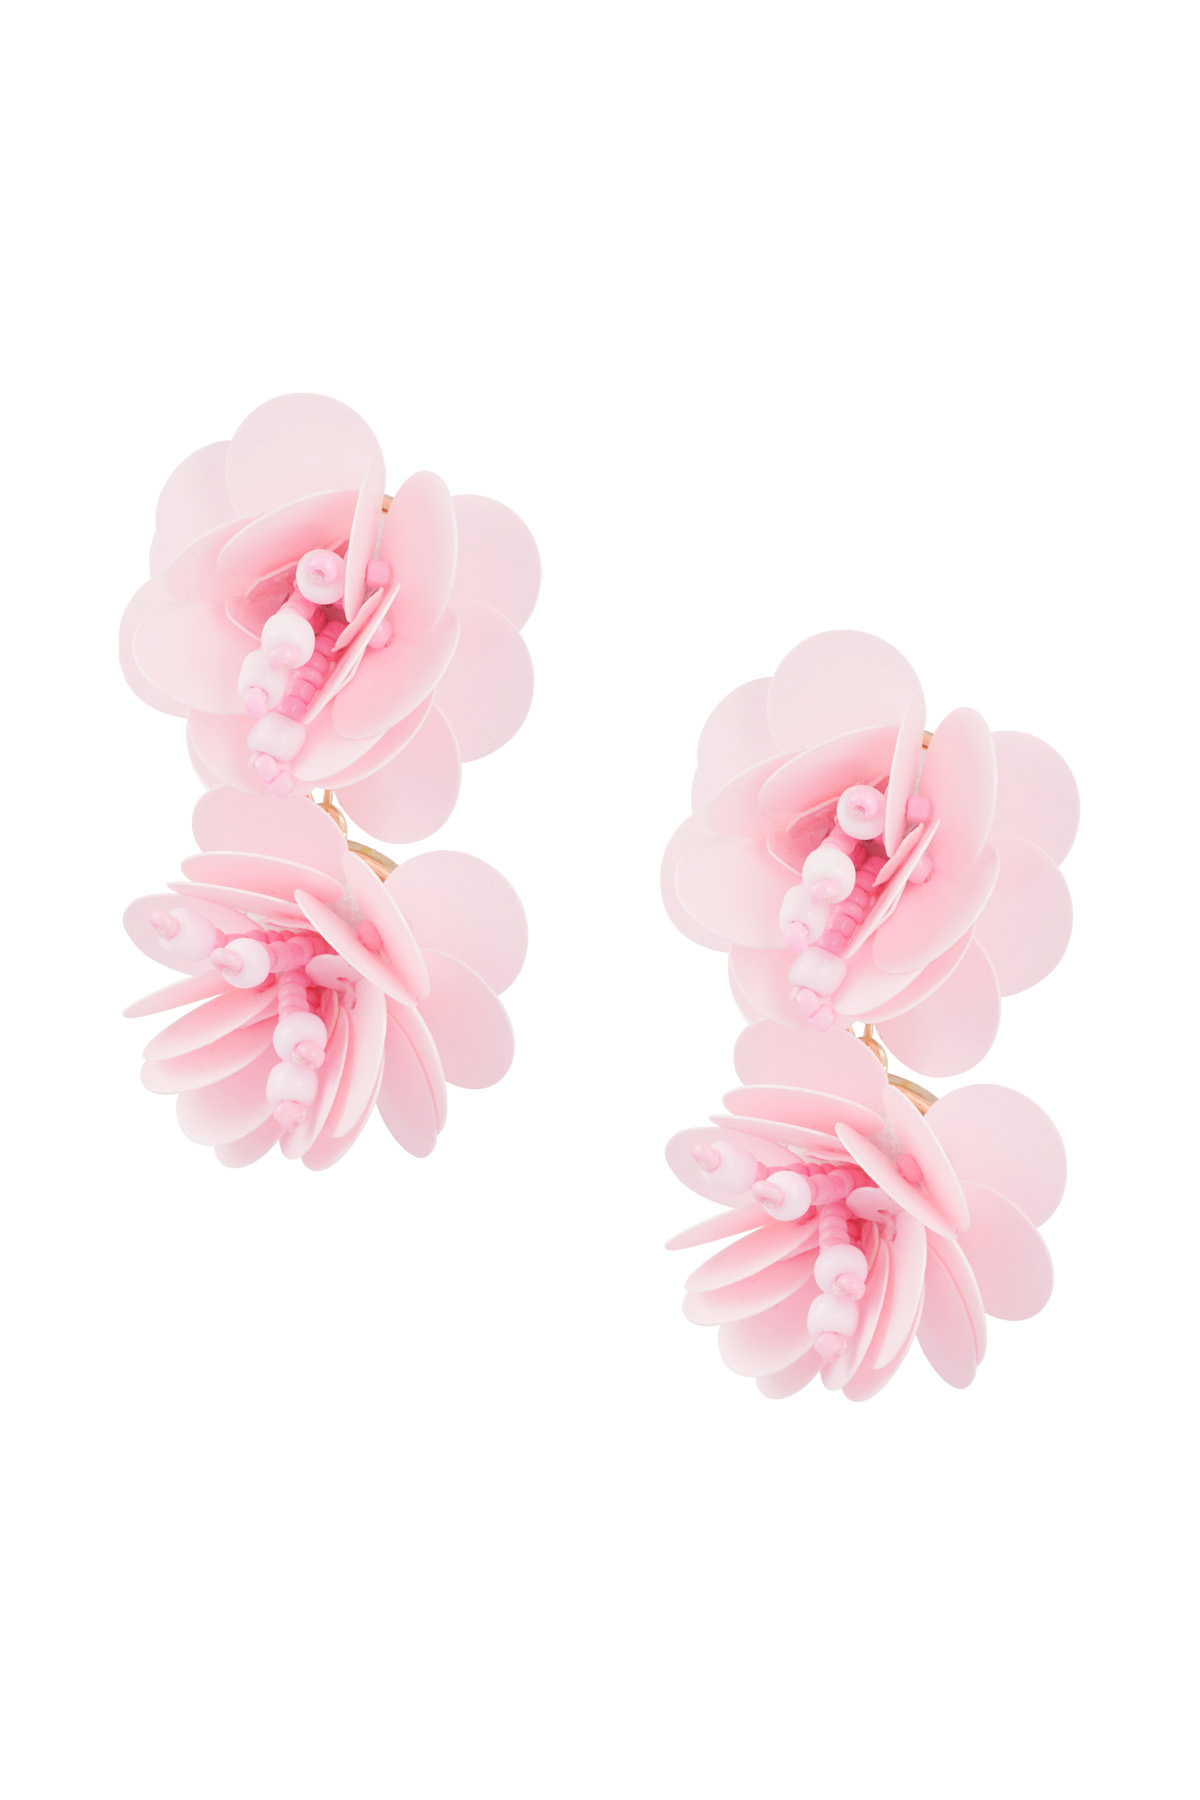 Earrings rose spirit - pale pink h5 